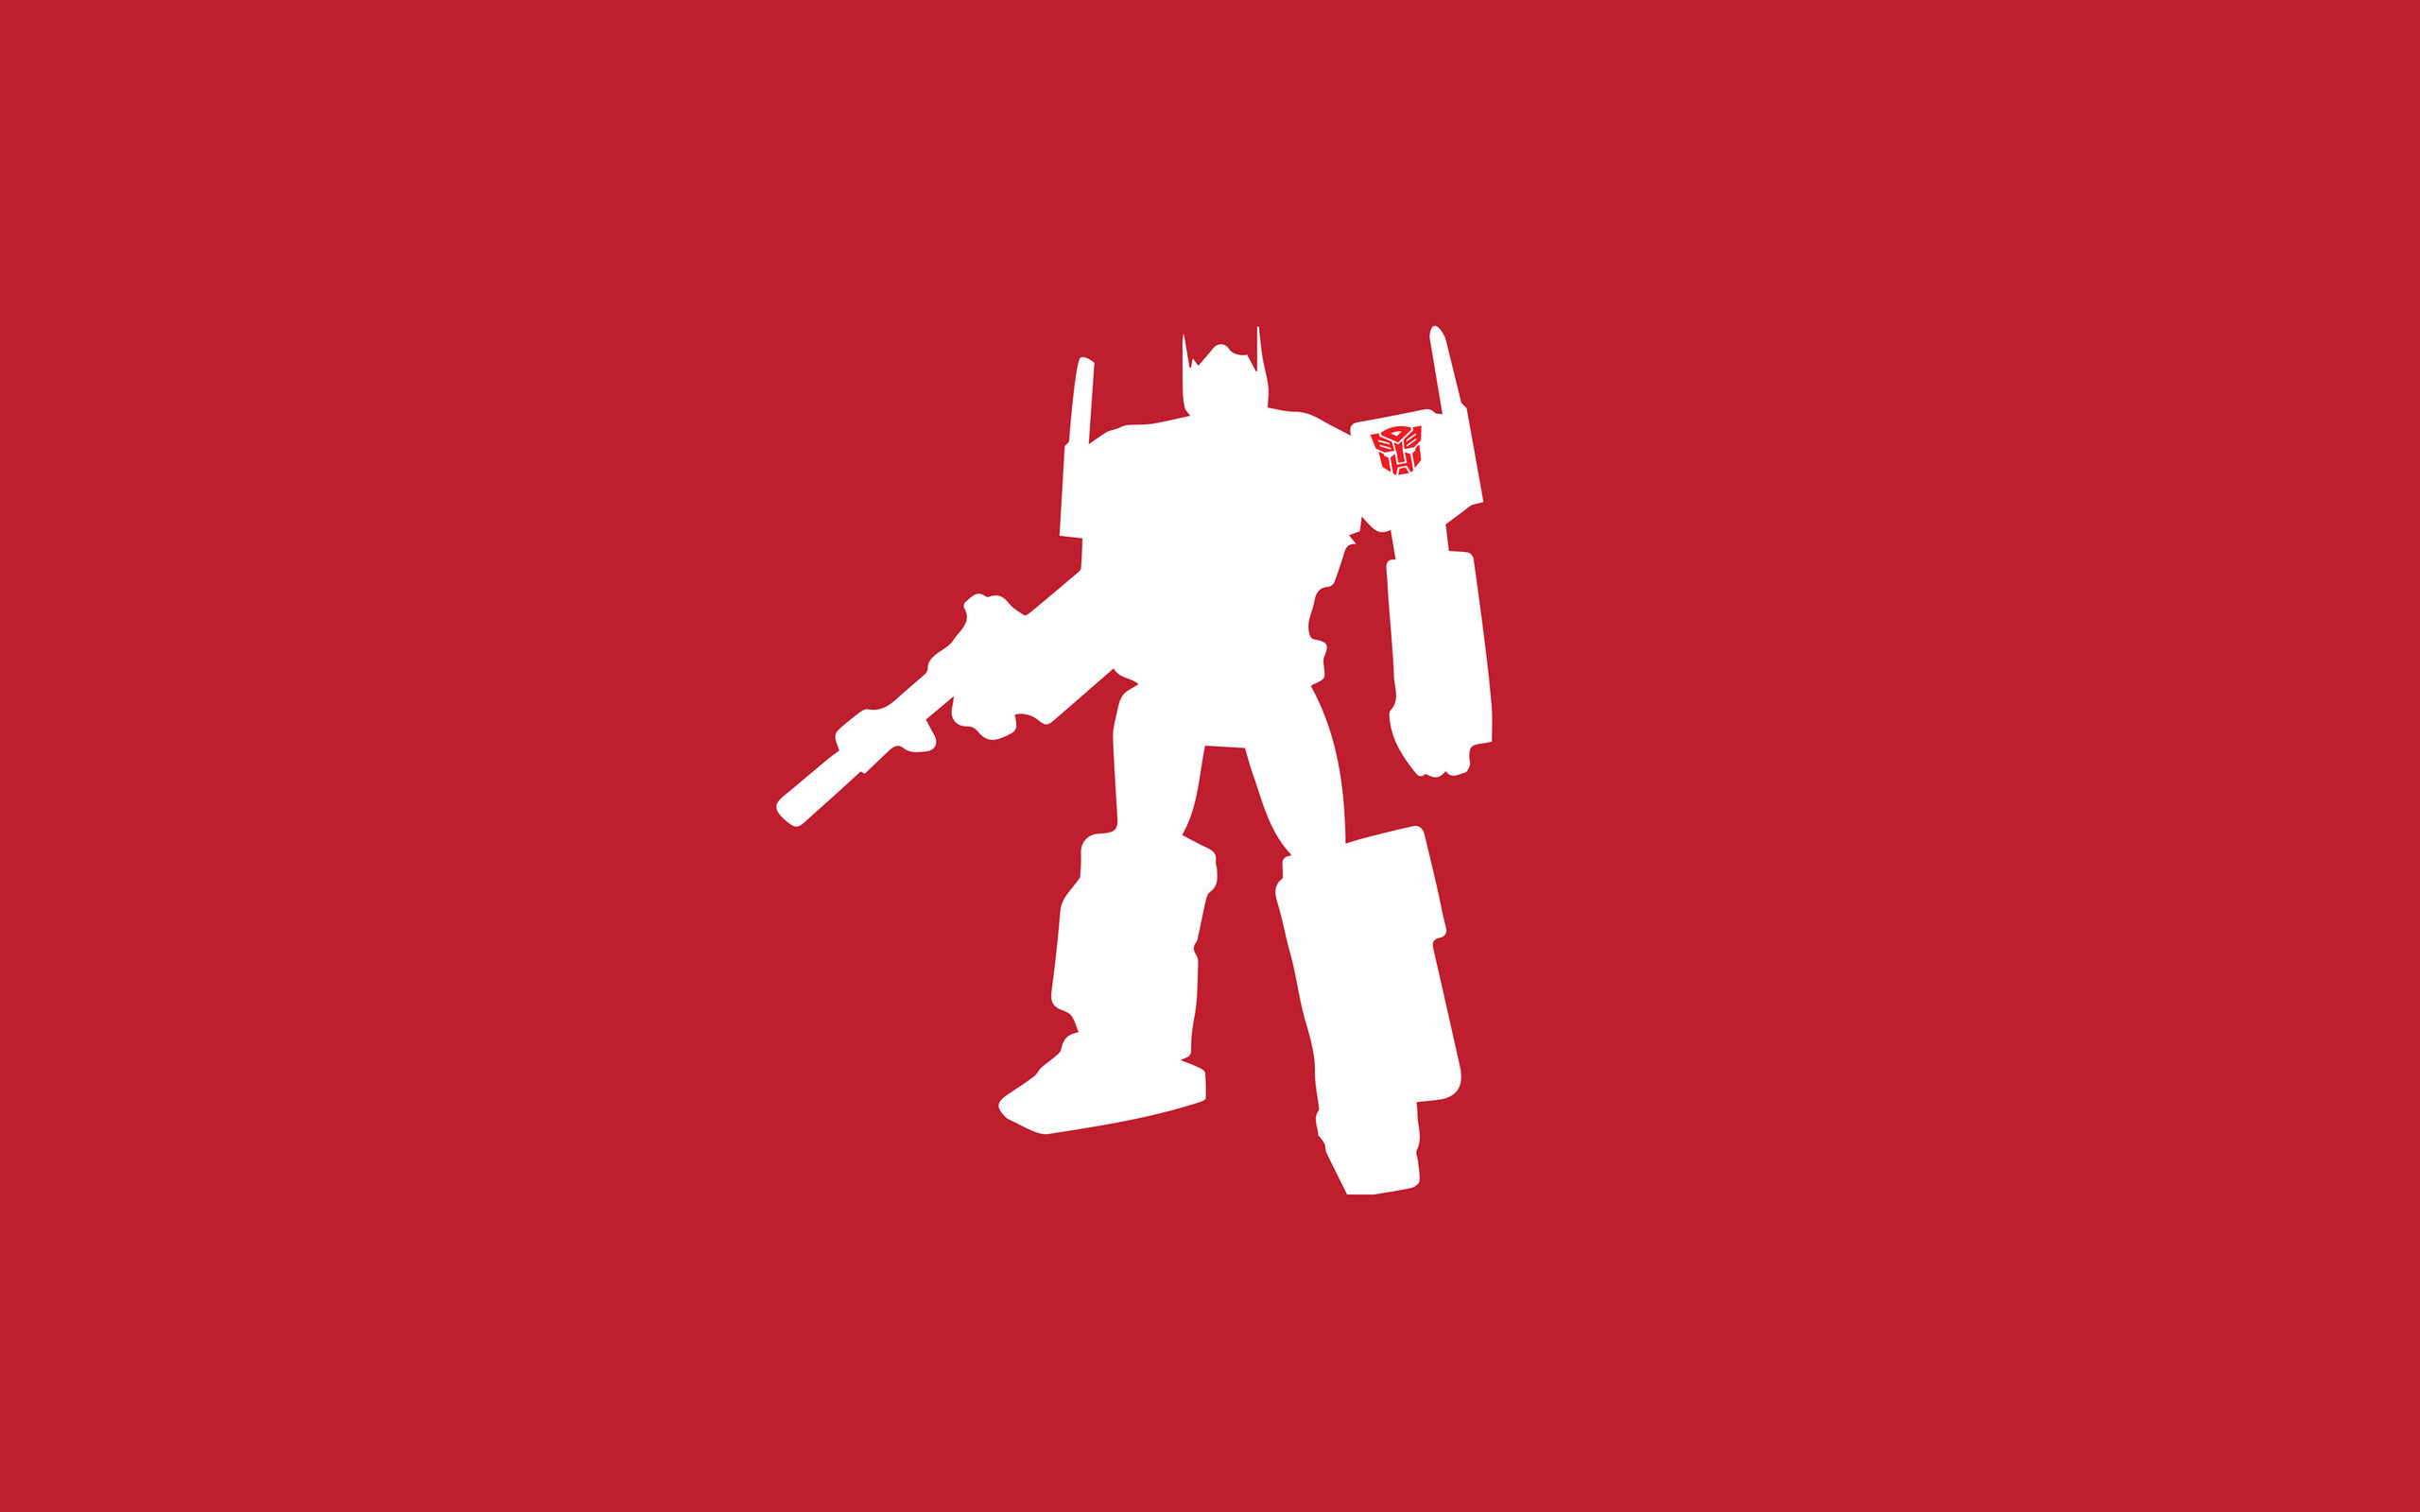 General 2560x1600 Transformers G1 Optimus Prime silhouette minimalism red background robot Transformers Hasbro simple background digital art